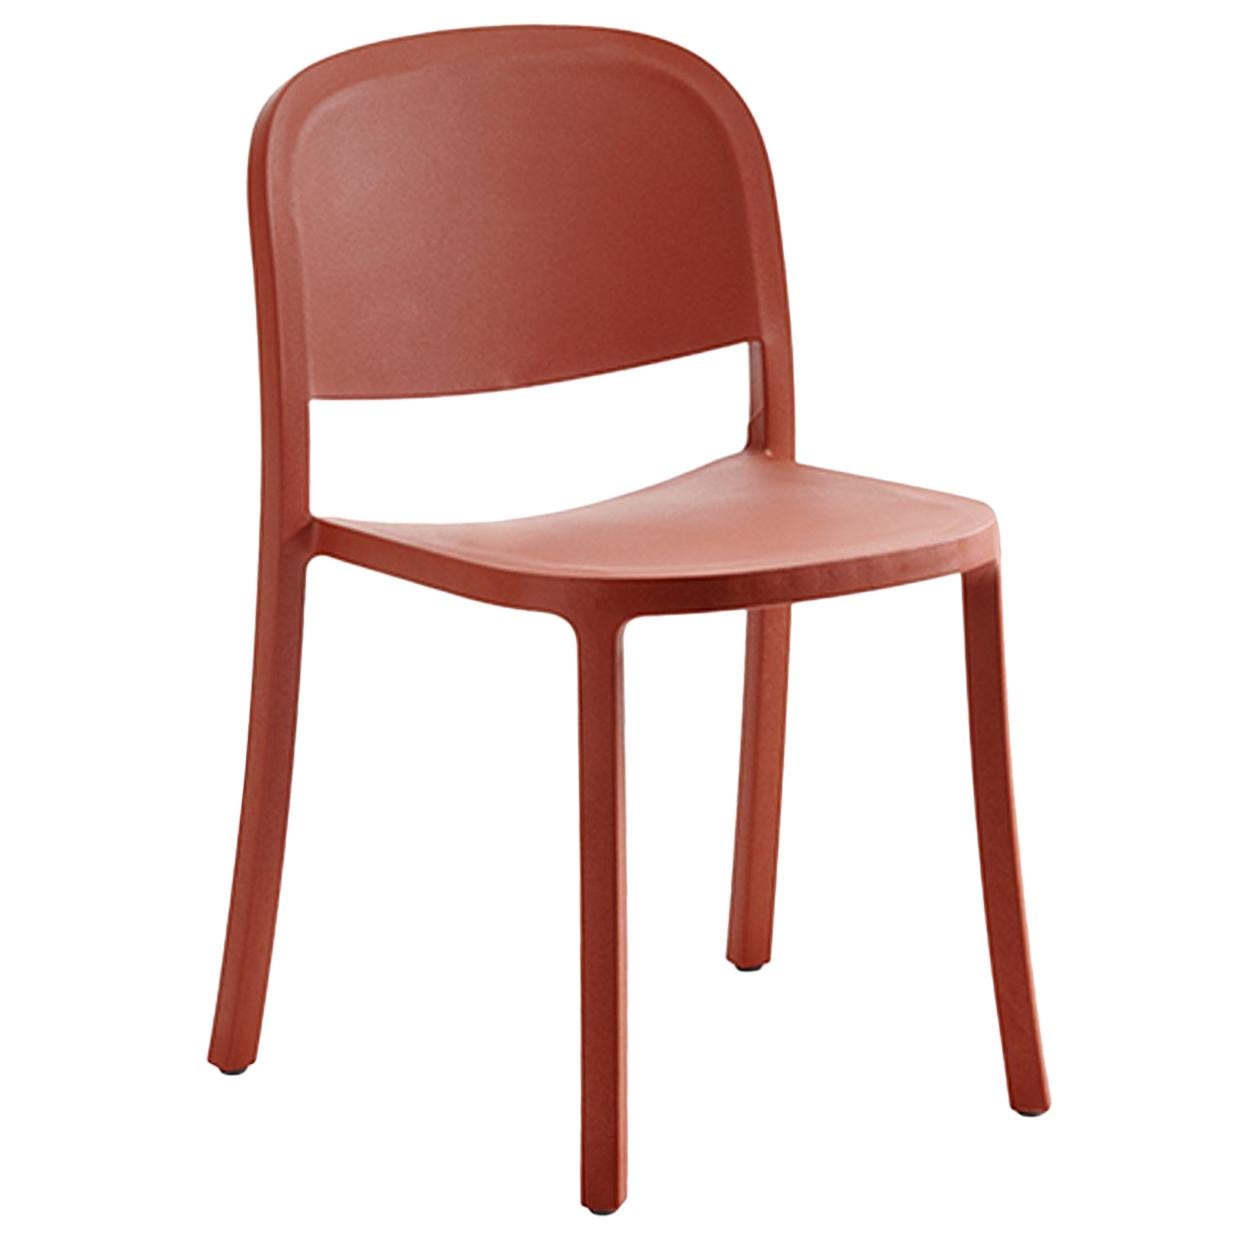 Emeco 1 Inch Reclaimed Chair in Orange by Jasper Morrison